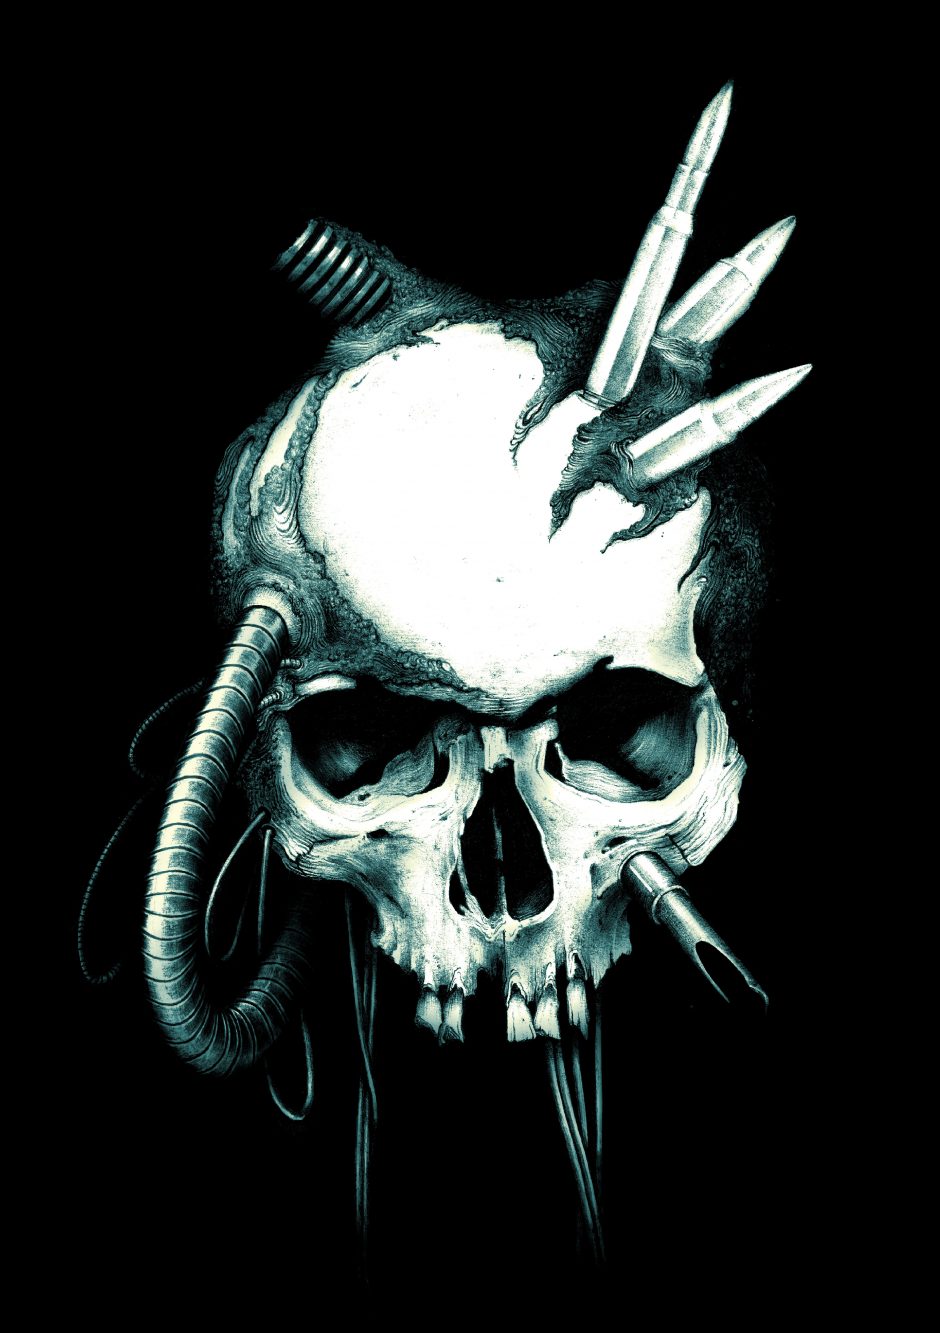 Manza April Darkart Ballpointpen Artist Illustration METAL Skull mecha bioorganic cables